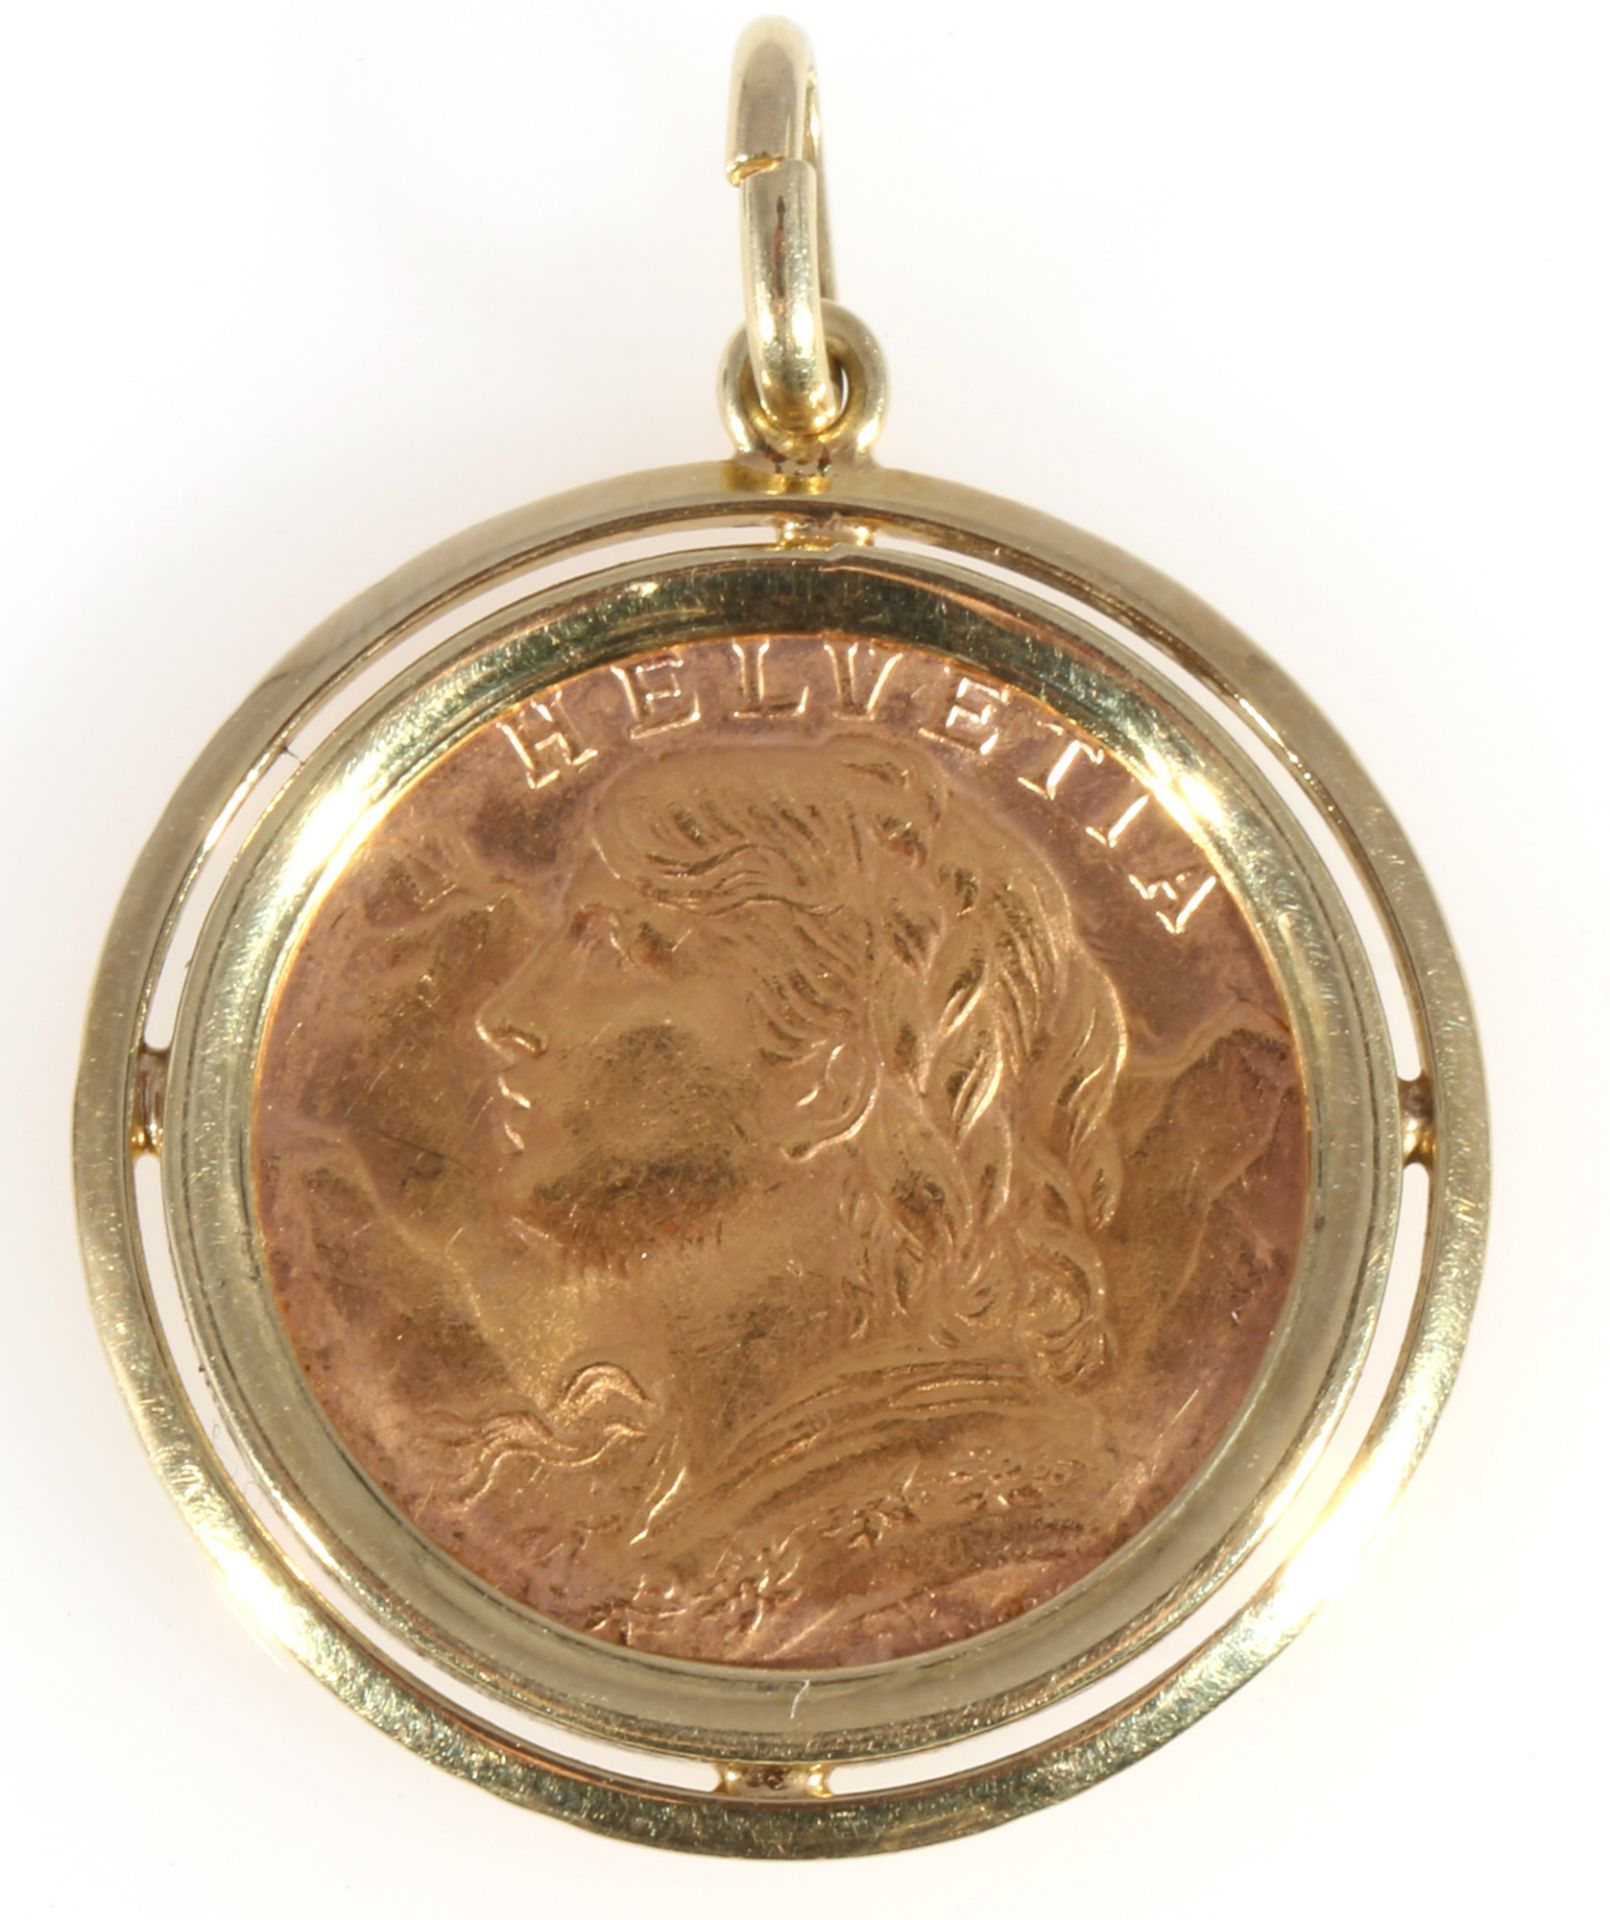 Goldmünze 20 Franken Schweiz Helvetia 1935 B, Gold coin 20 FR Switzerland Helvetia 1935 B,